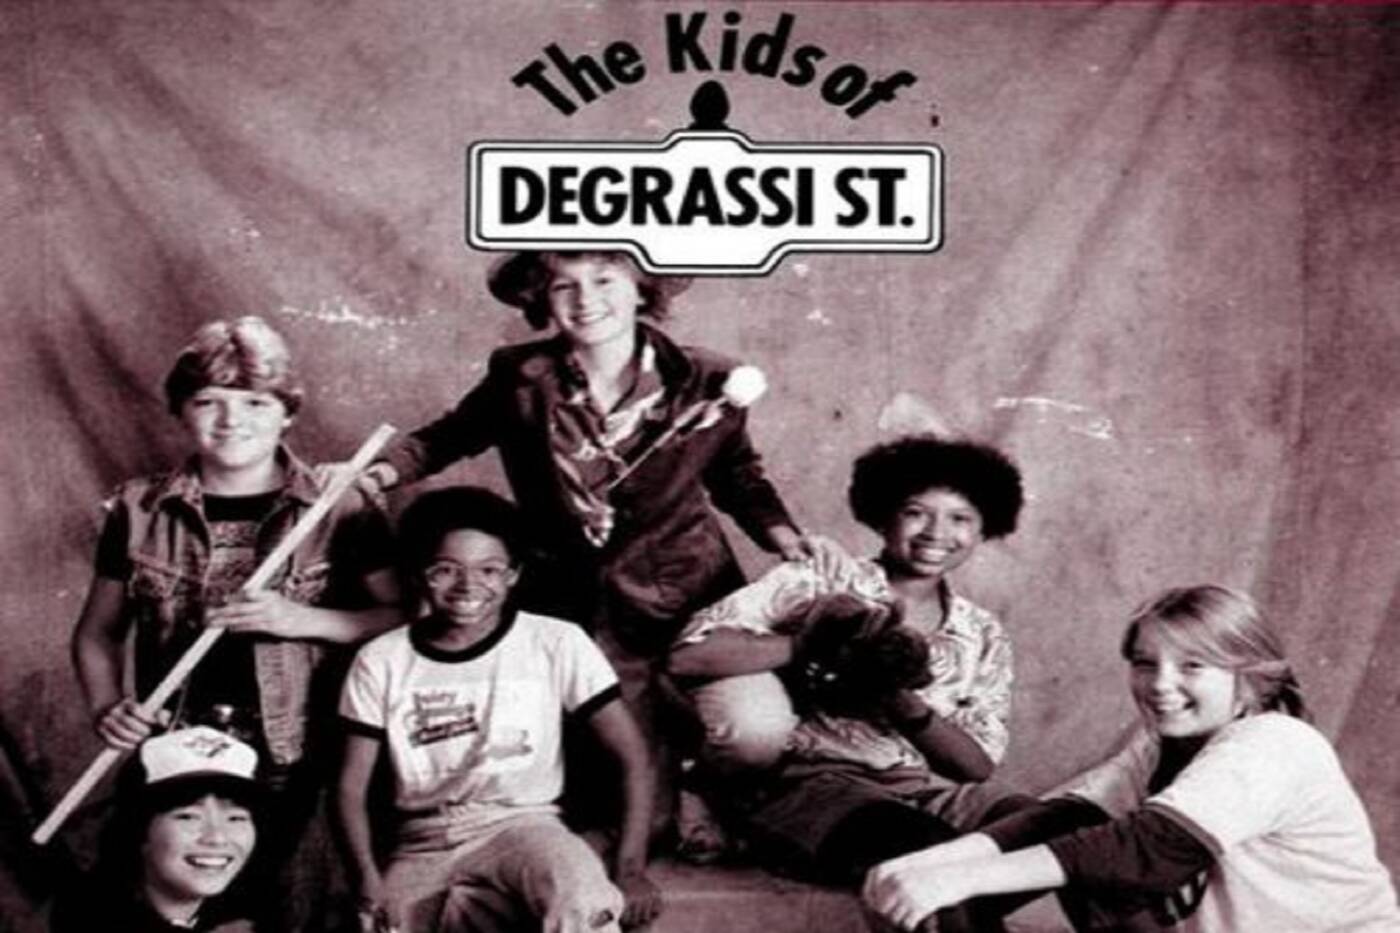 The kids of Degrassi Street